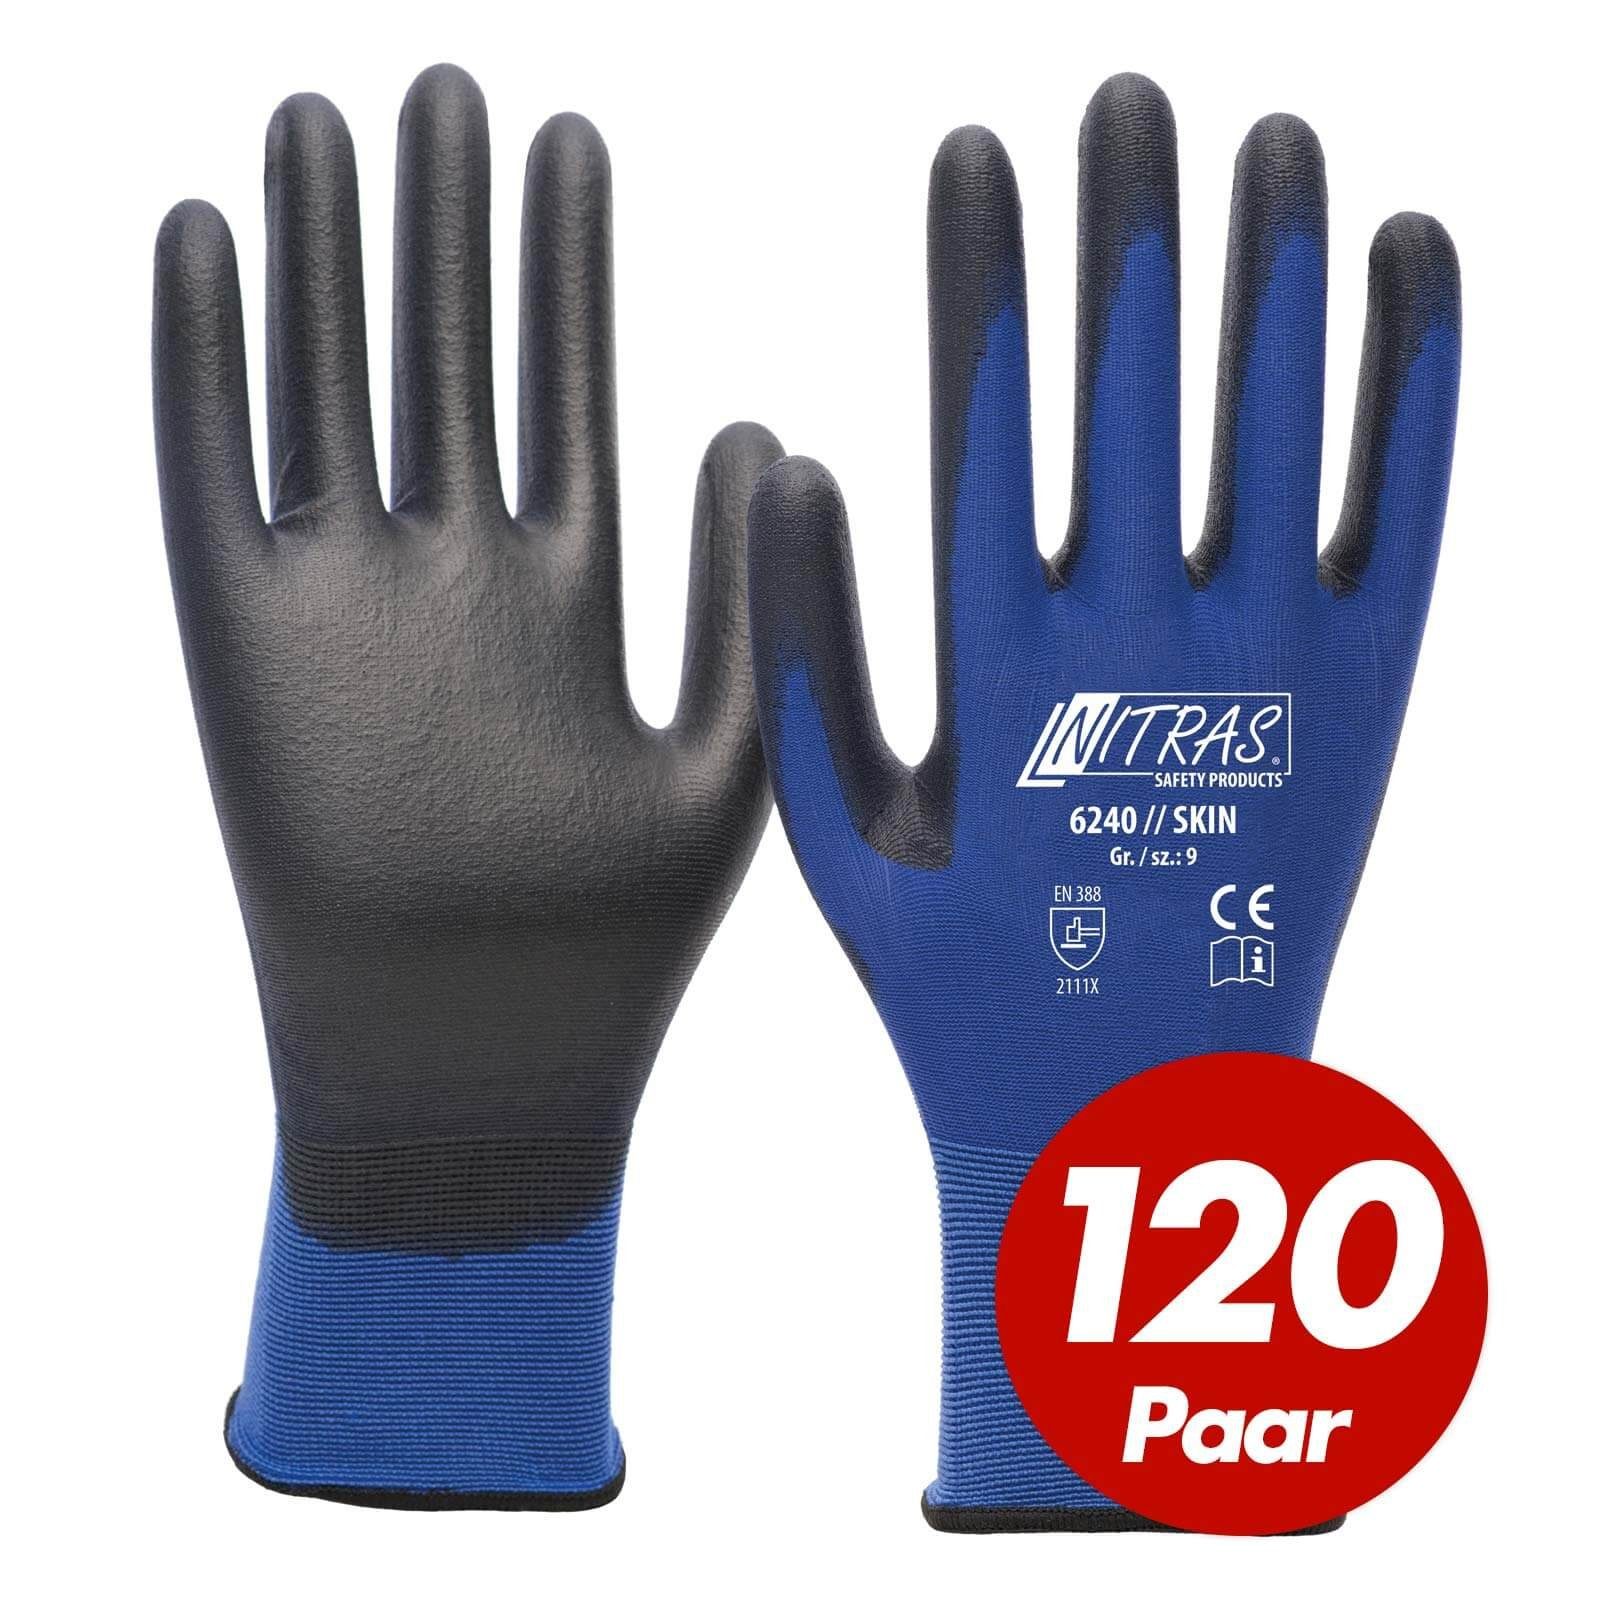 Nitras Nitril-Handschuhe NITRAS 6240 Skin Nylon-Strickhandschuhe, PU-Beschichtung - 120 Paar (Spar-Set) schwarz/blau | Handschuhe